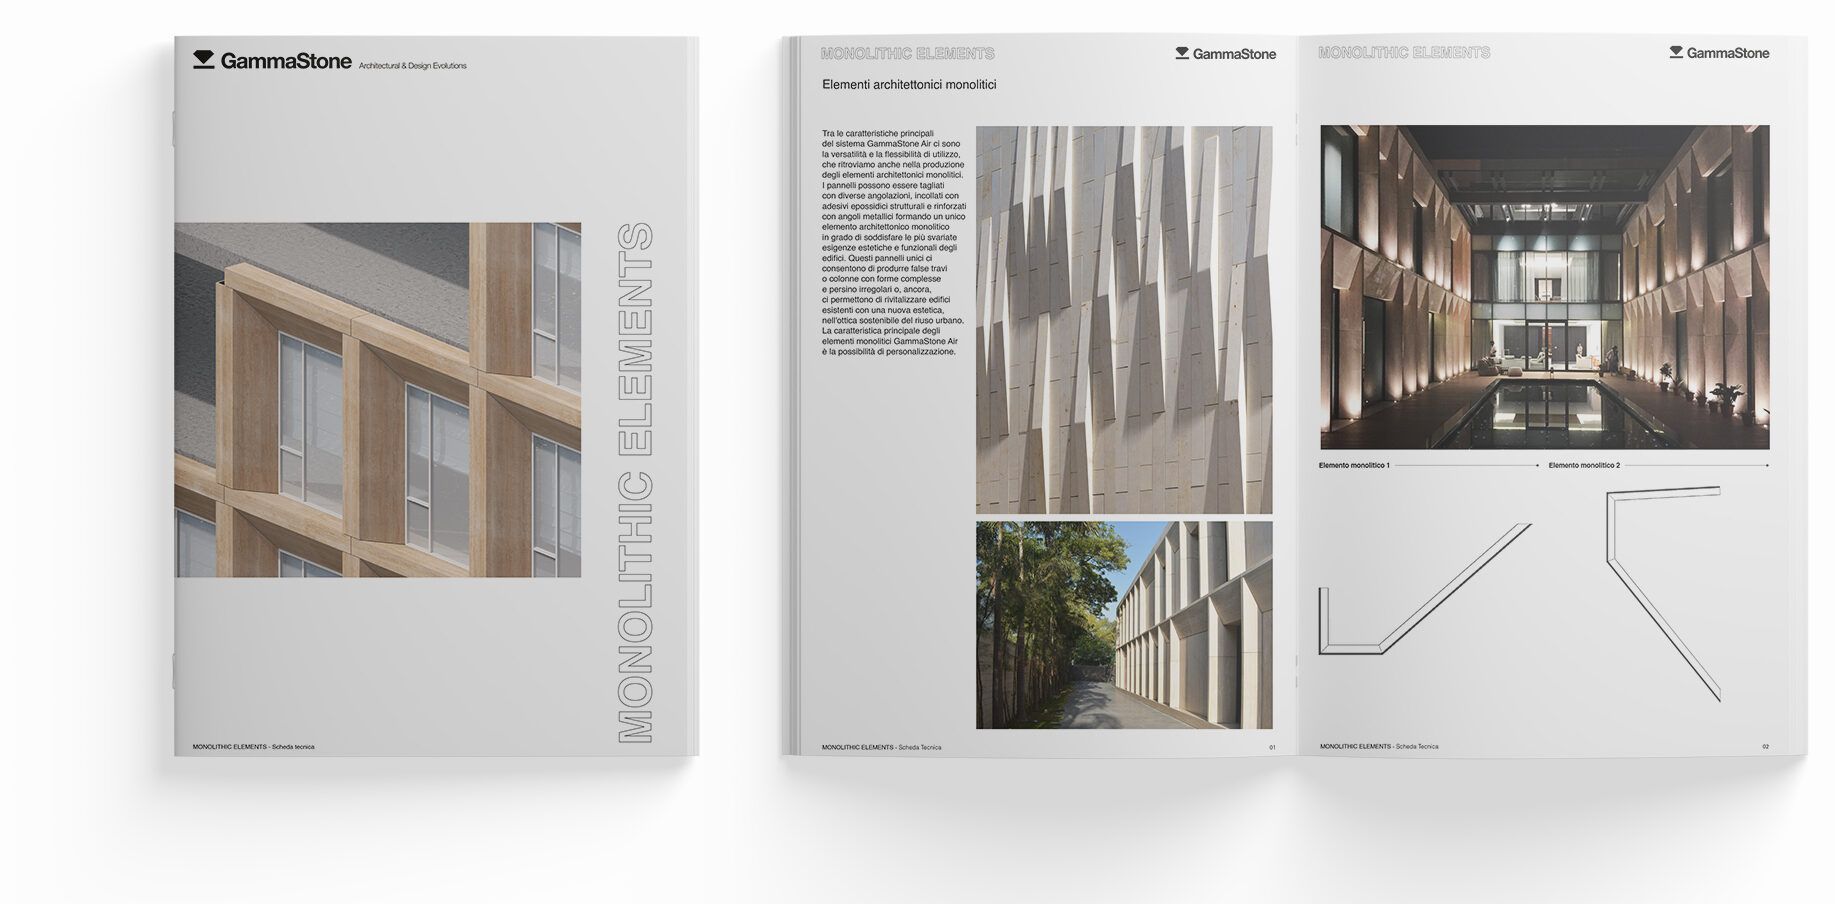 Monolithic architectural elements - GammaStone